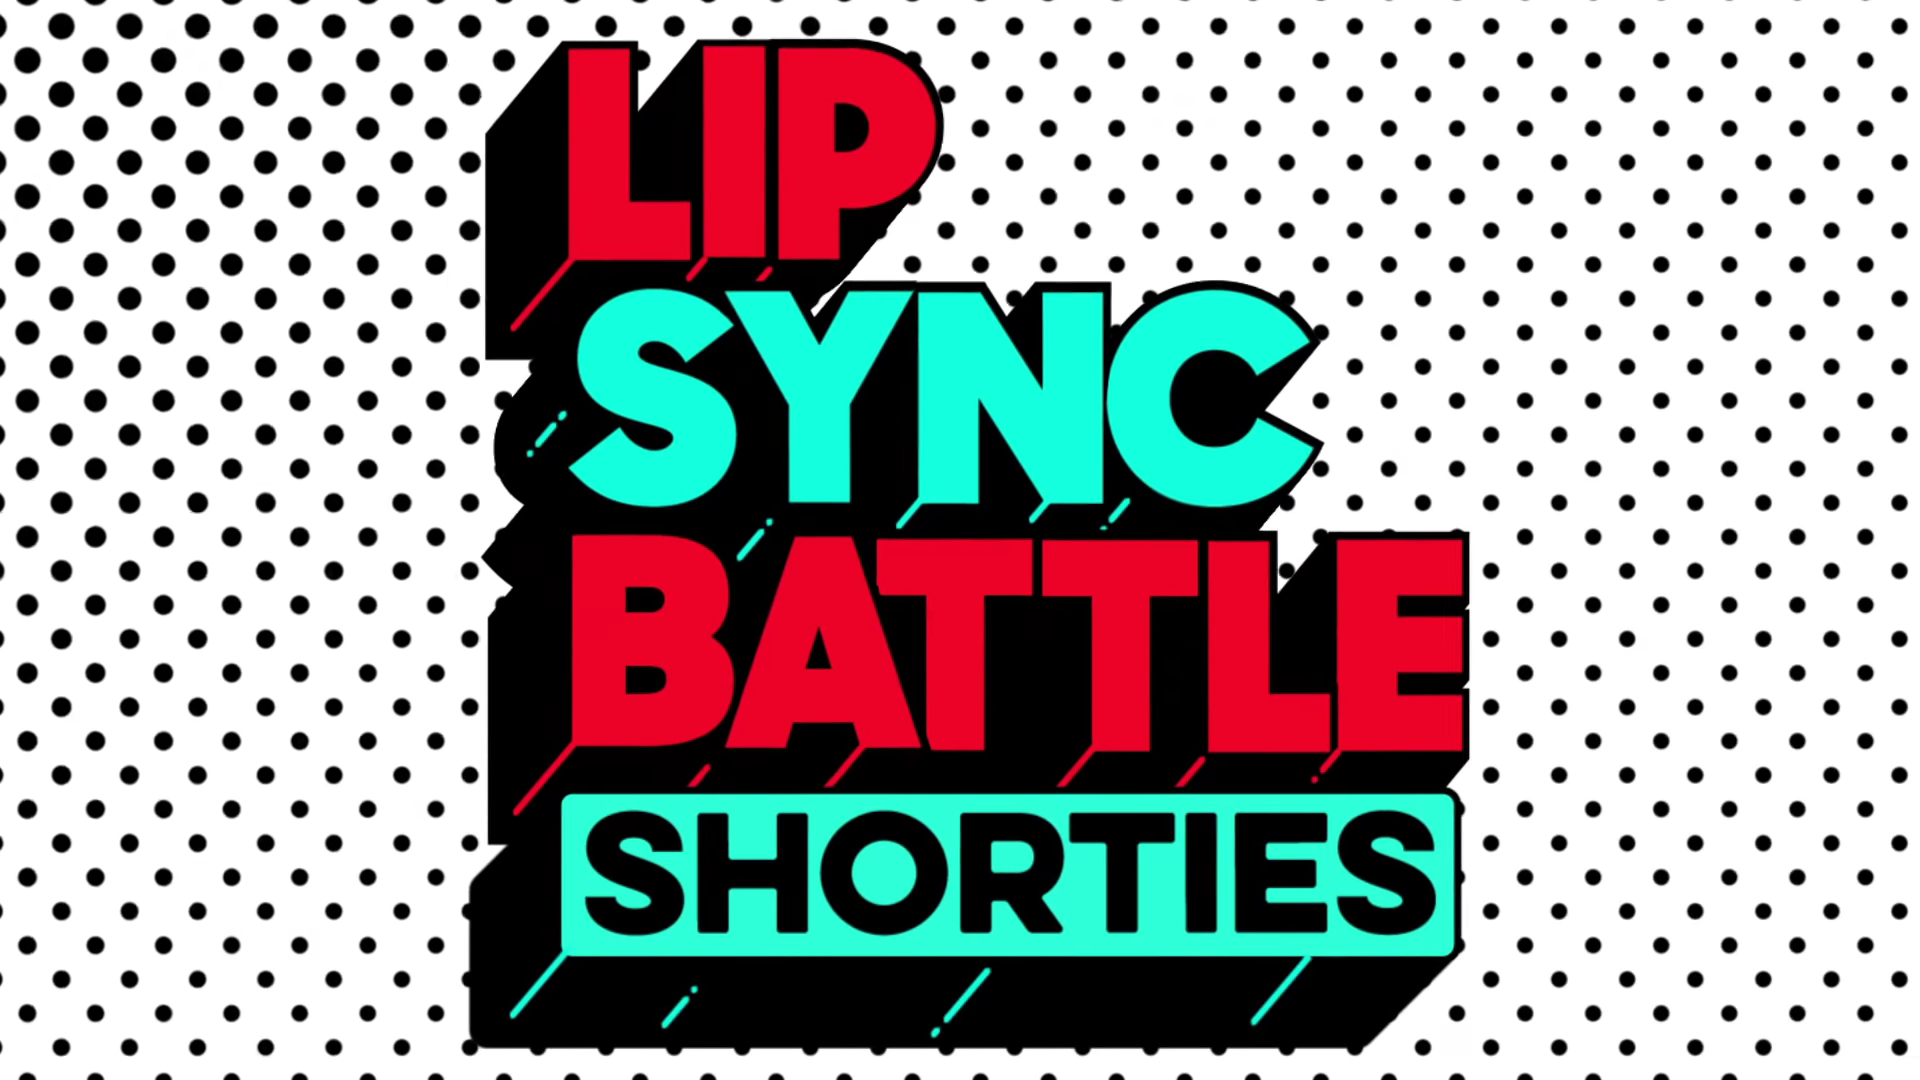 lip sync battle